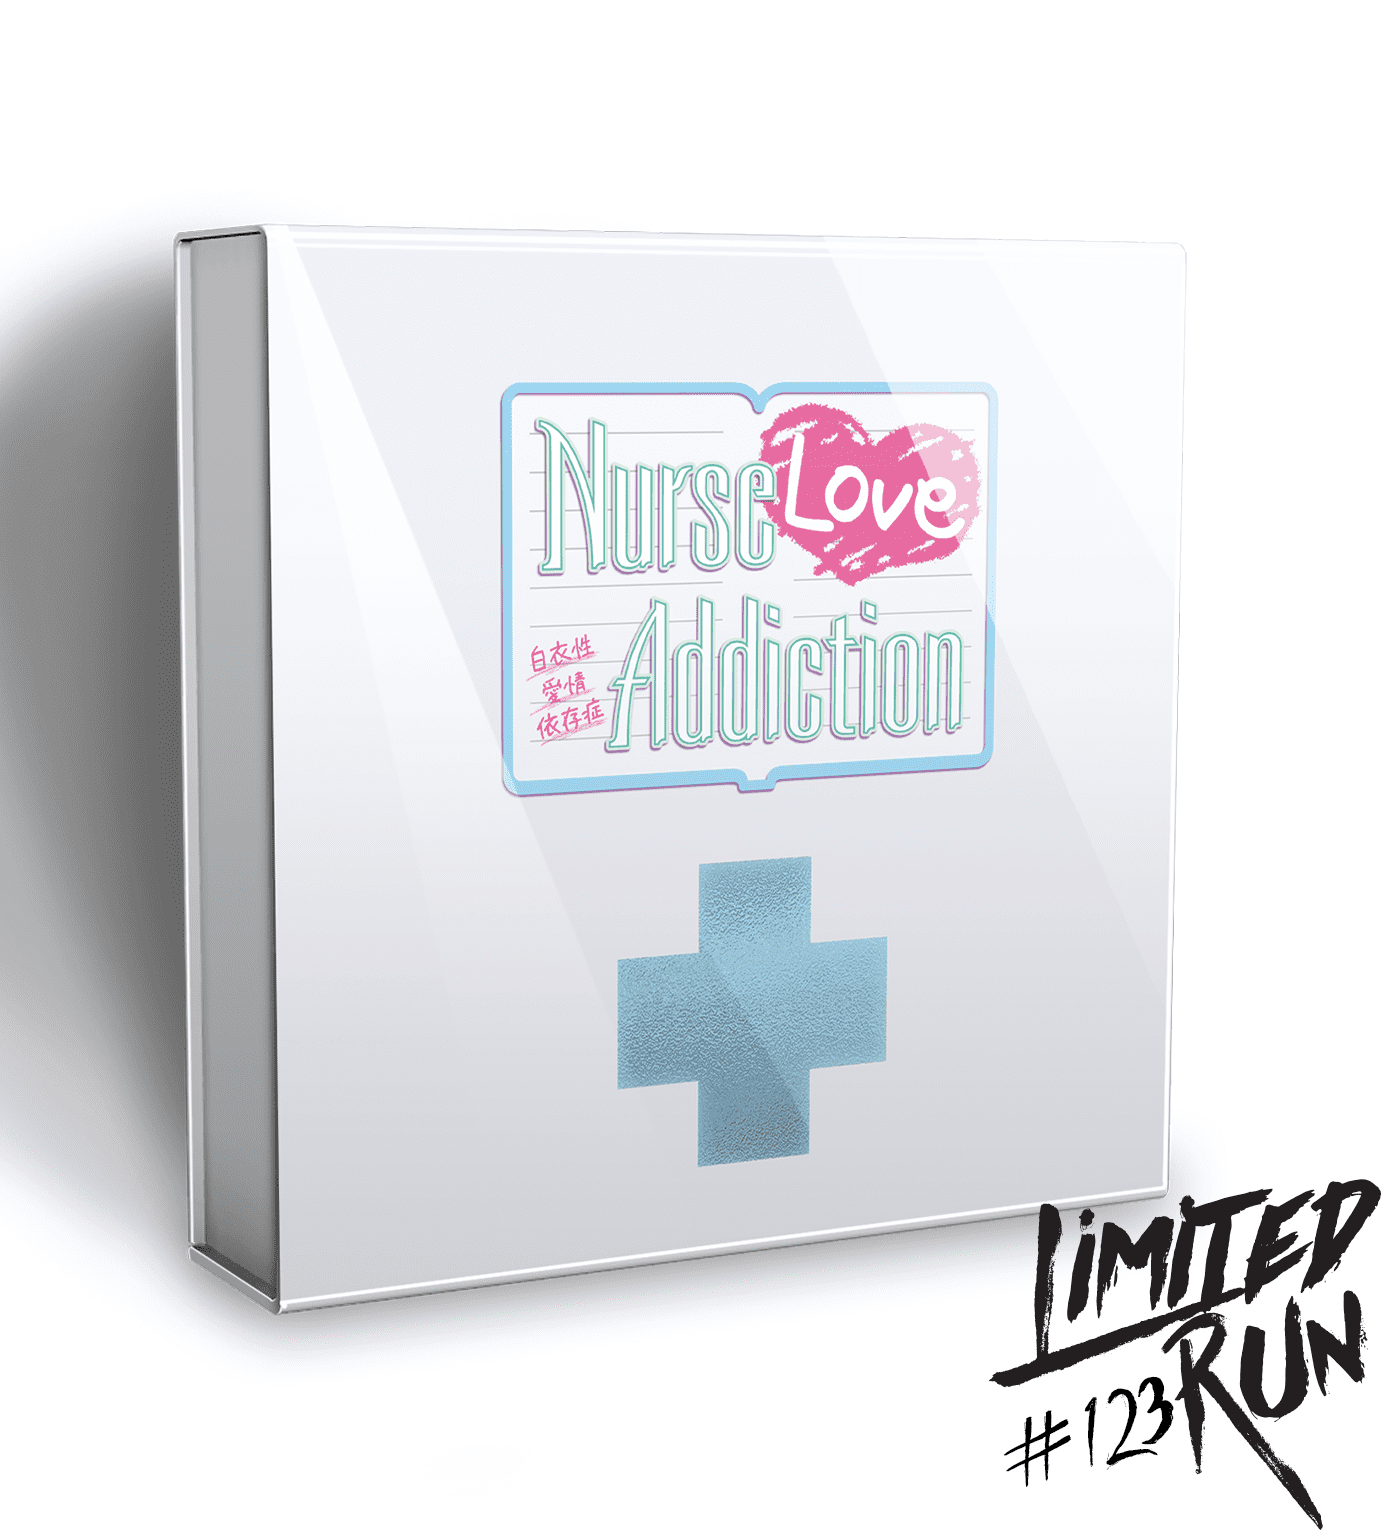 Nurse Love Addiction Medkit Edition Limited Run 123